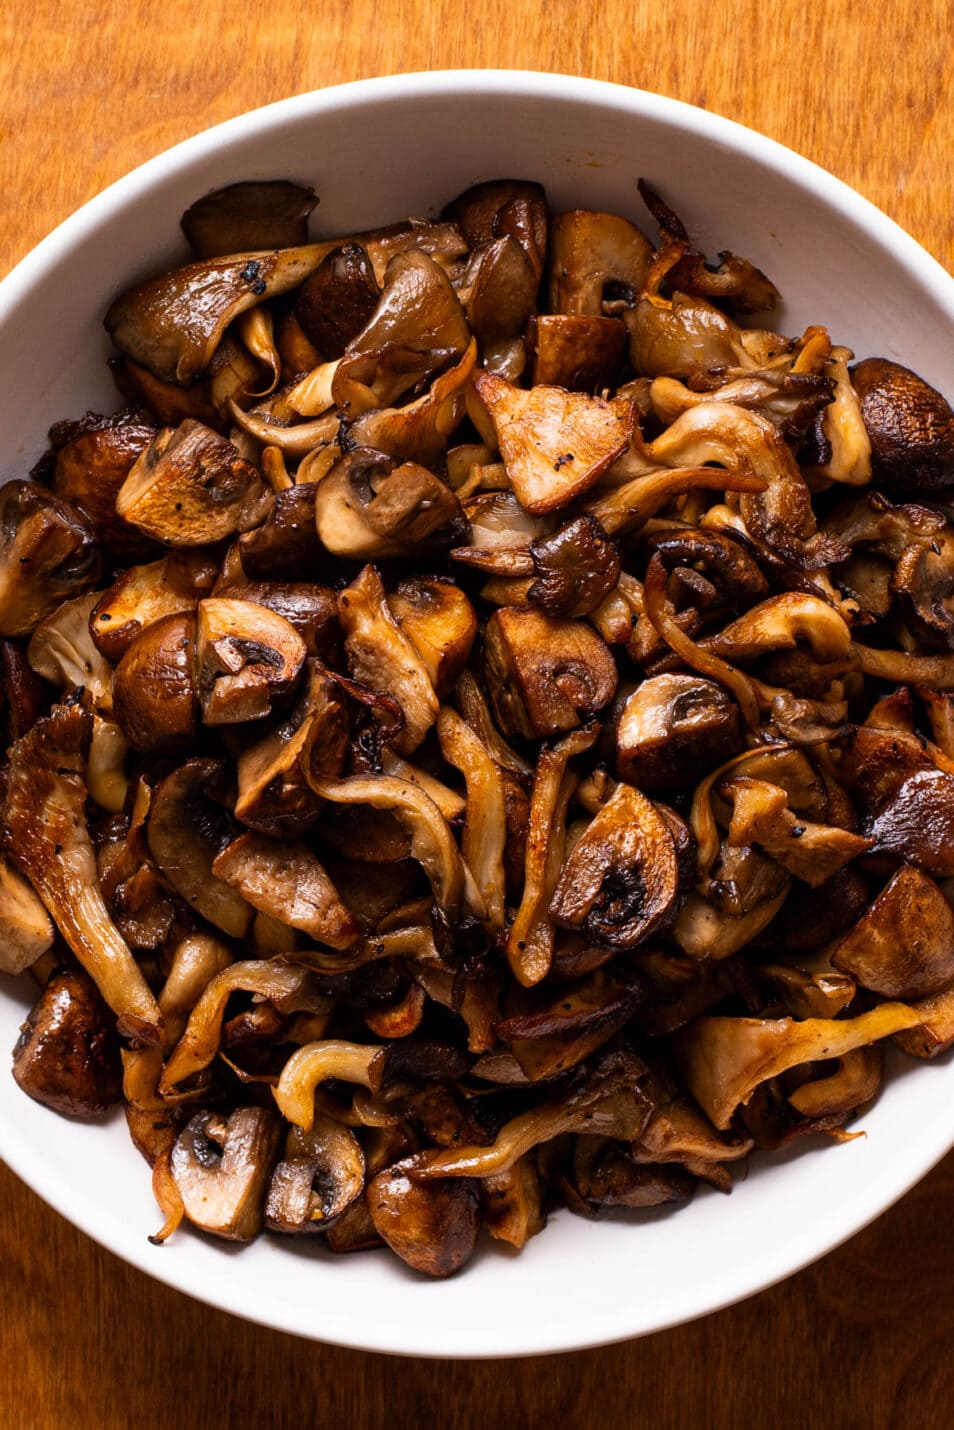 Seared mushrooms in a bowl.